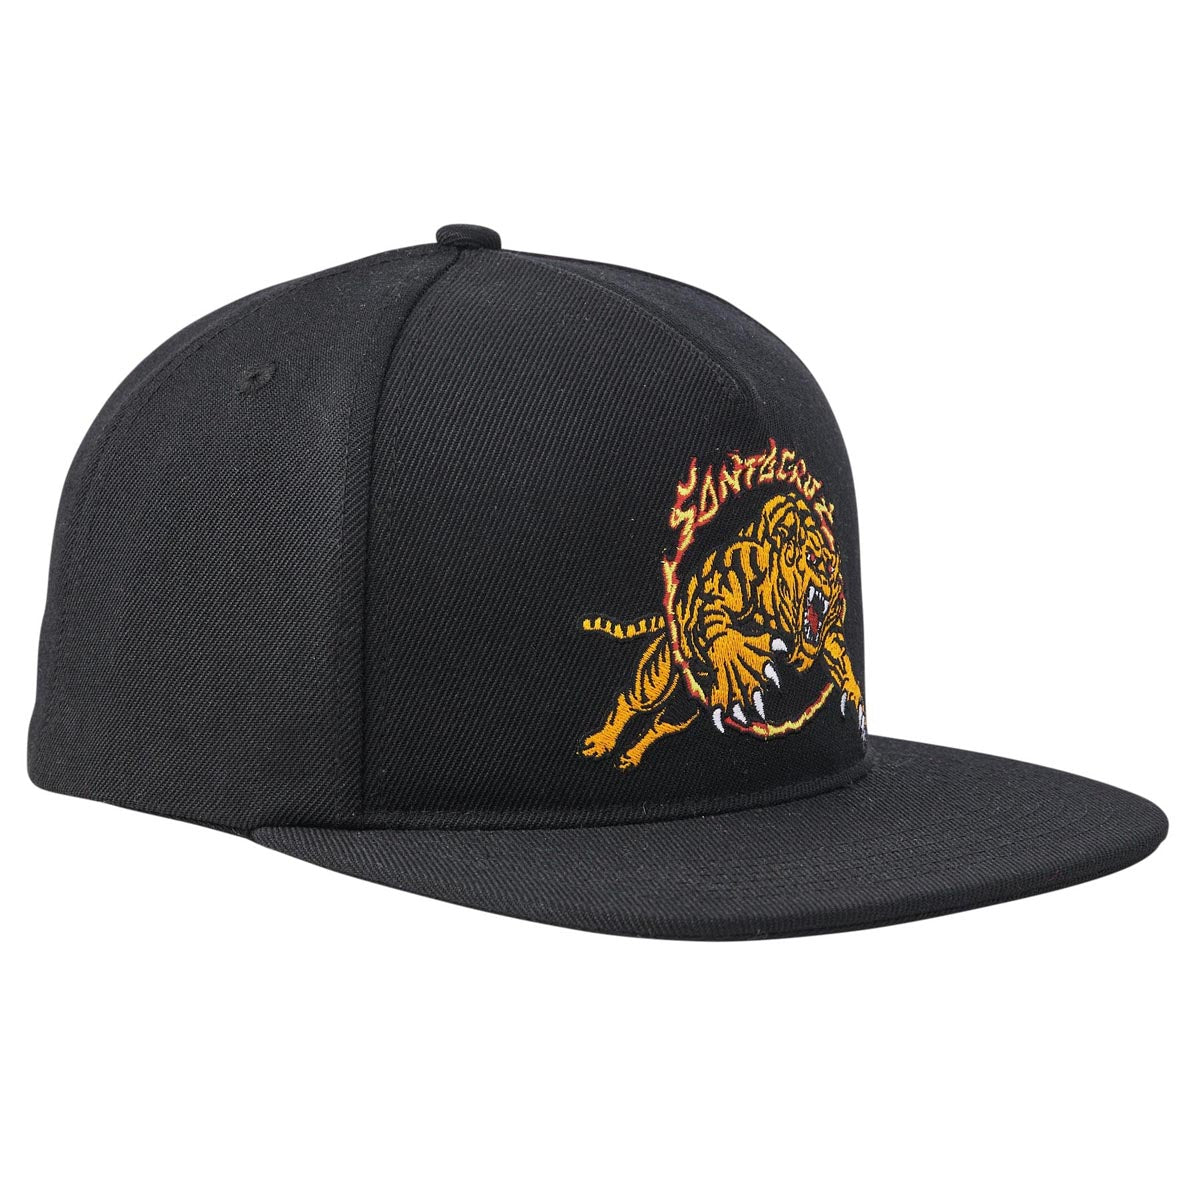 Santa Cruz Salba Tiger Snapback Hat - Black image 2